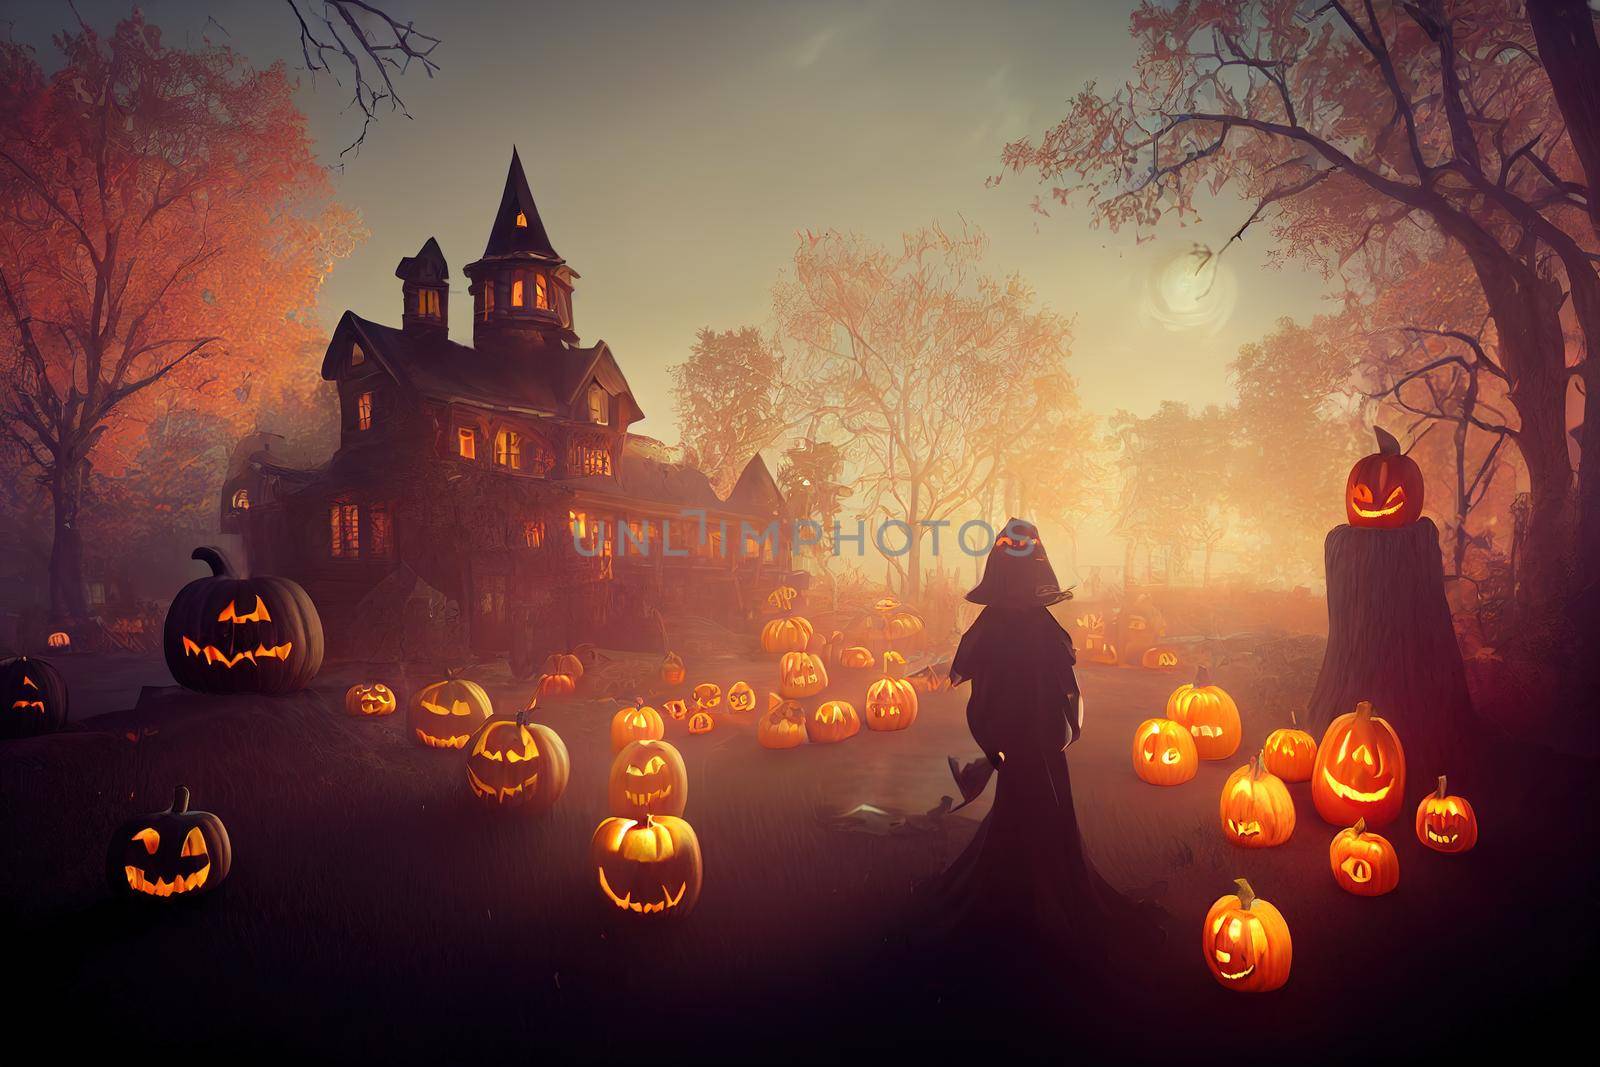 Scary Halloween House by 2ragon